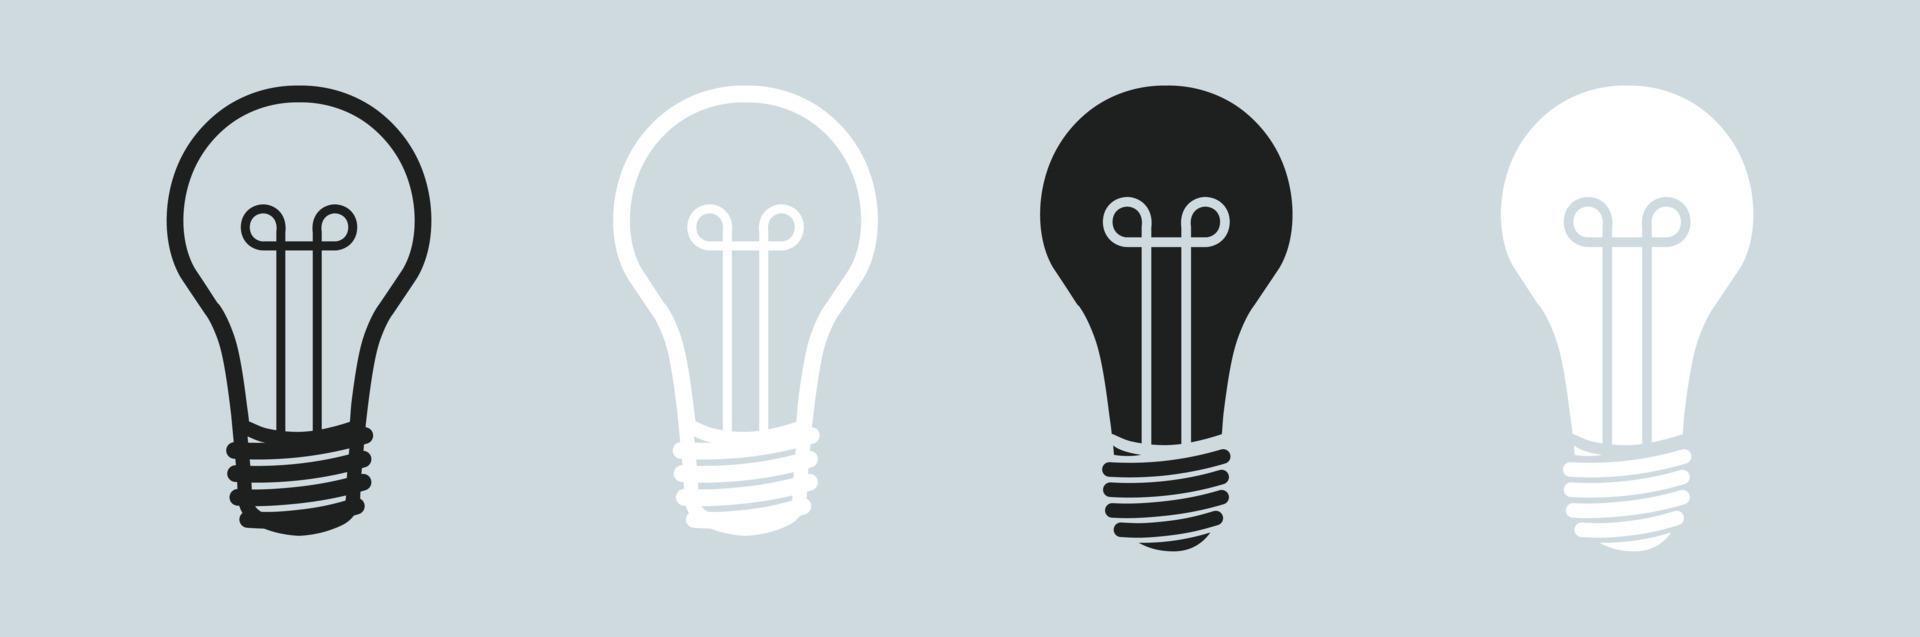 Lamp bulb idea icon set in black and white colours. vector